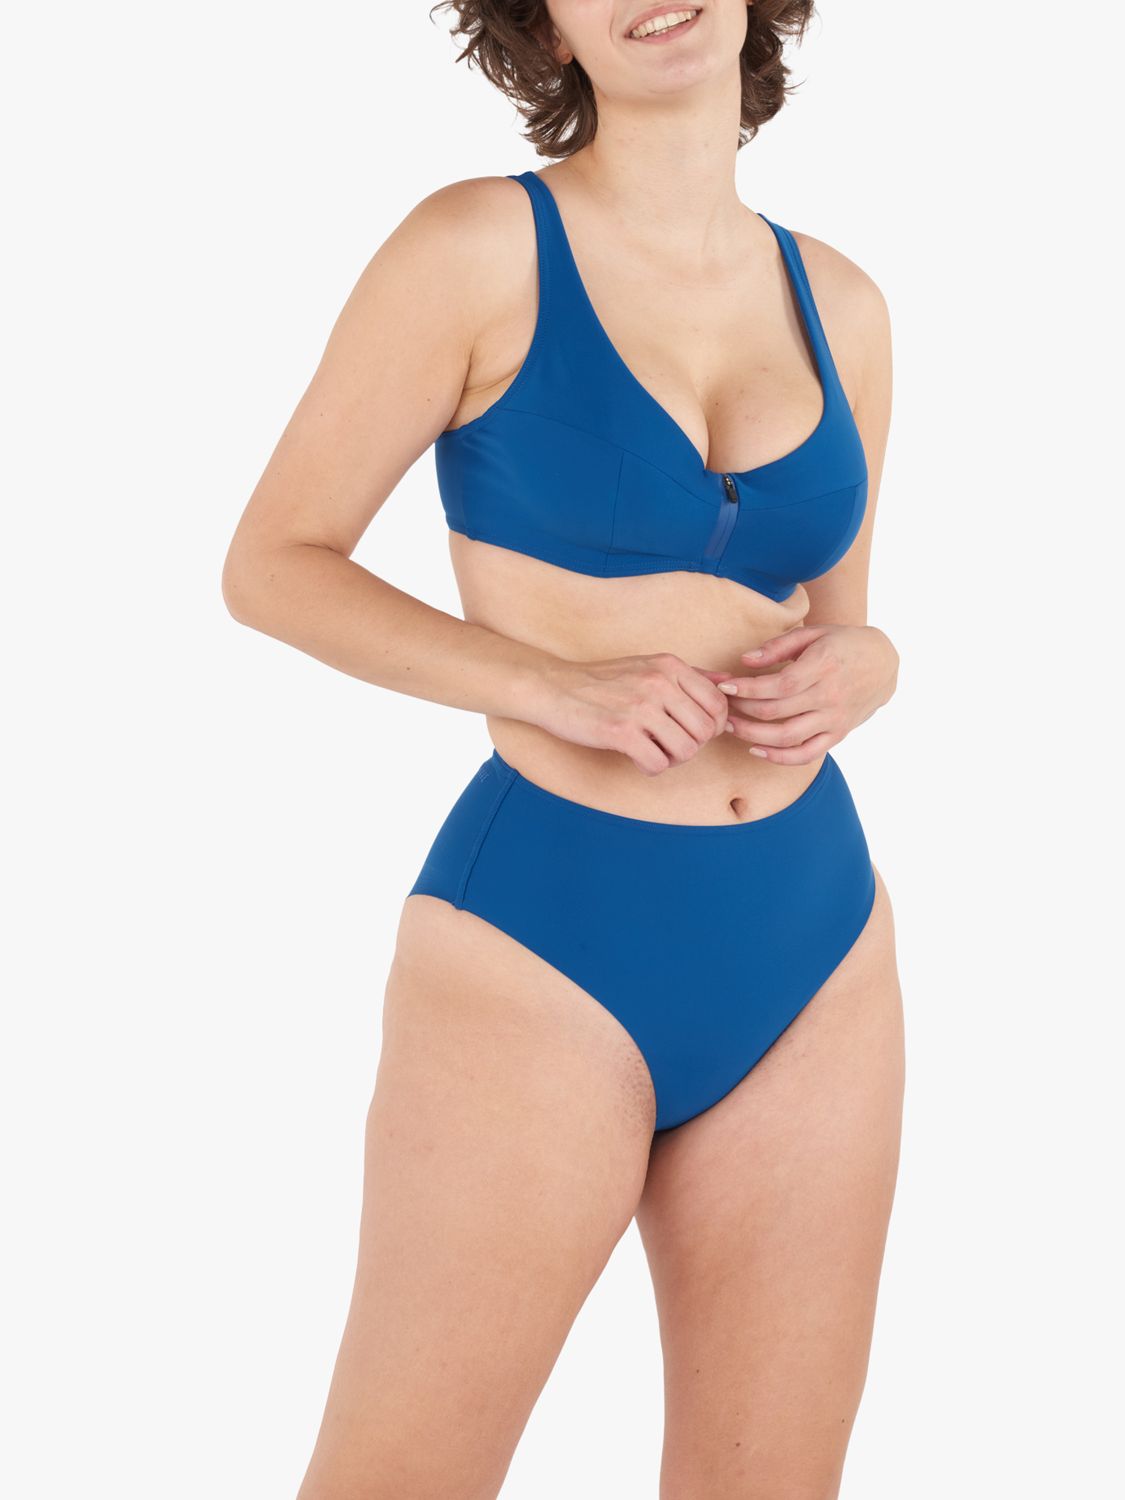 Maison Lejaby Naïade Zip-Front Bikini Top, Bleu Waves, 34C